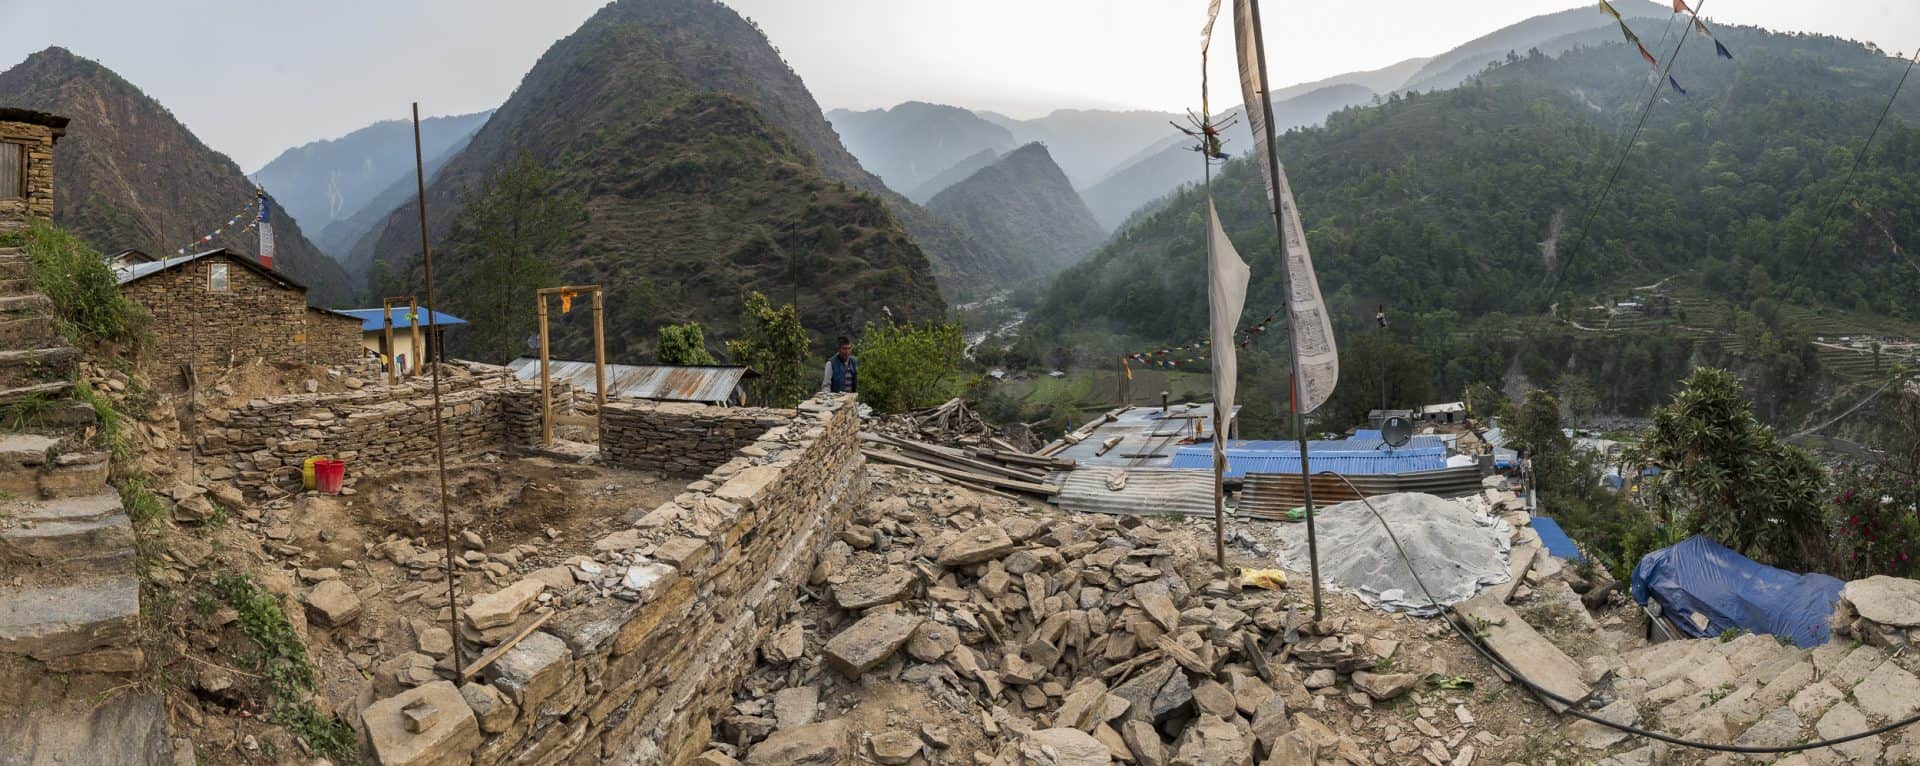 Rebuilding in Yangri is underway after a series of powerful earthquakes in Nepal